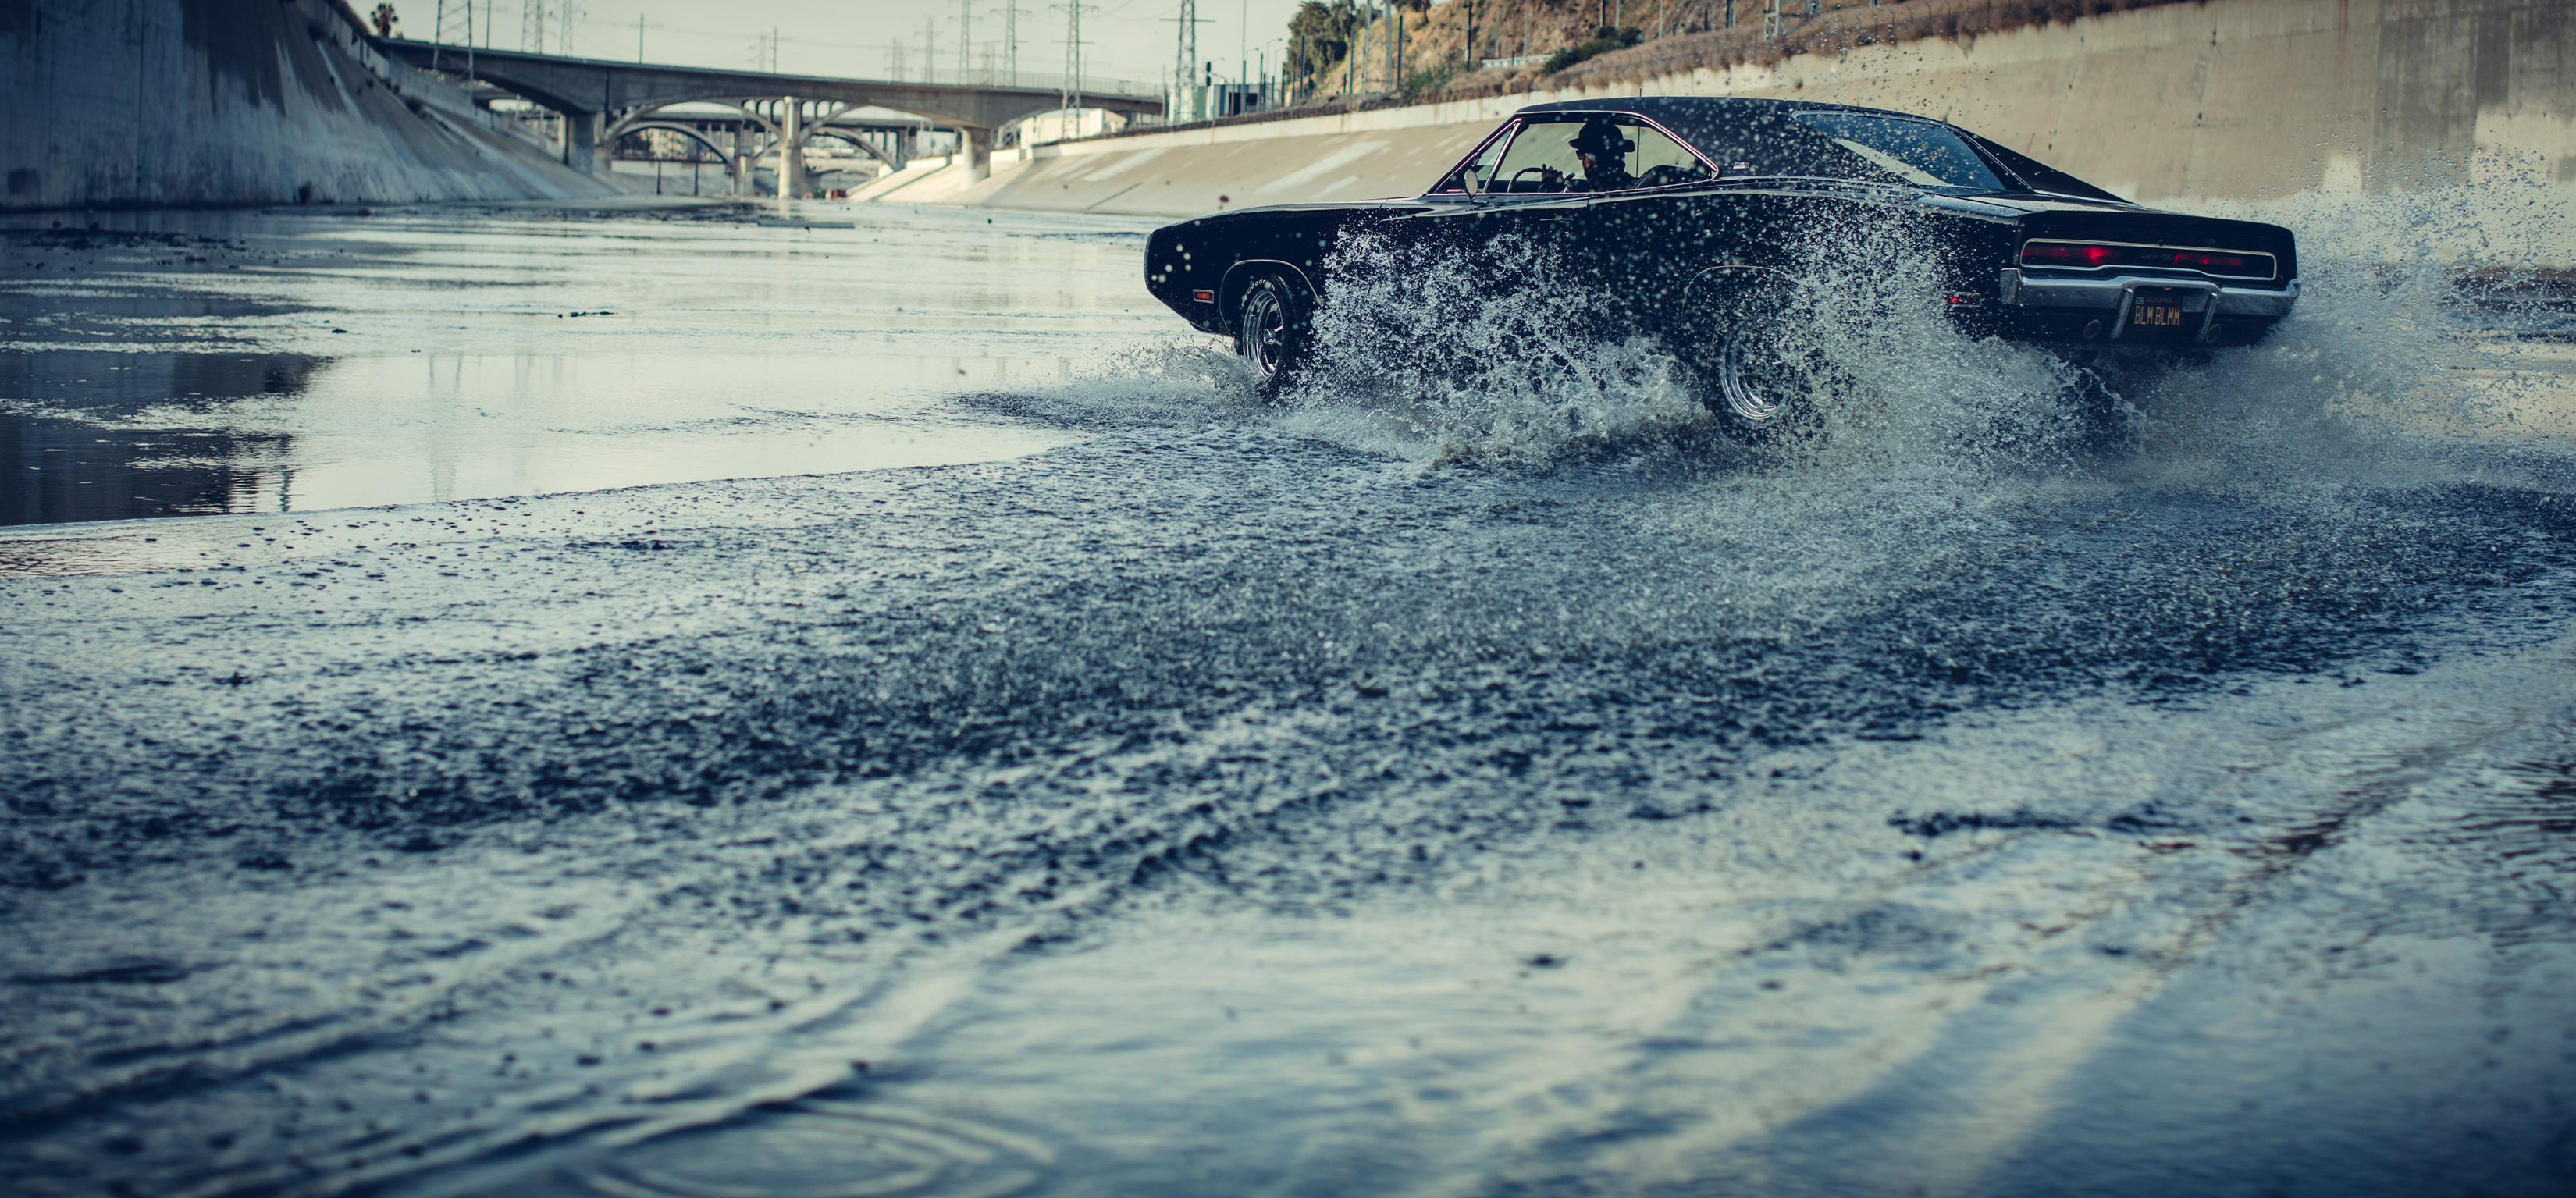 Dodge Charger, Car, Water, Drift, Black cars Wallpaper